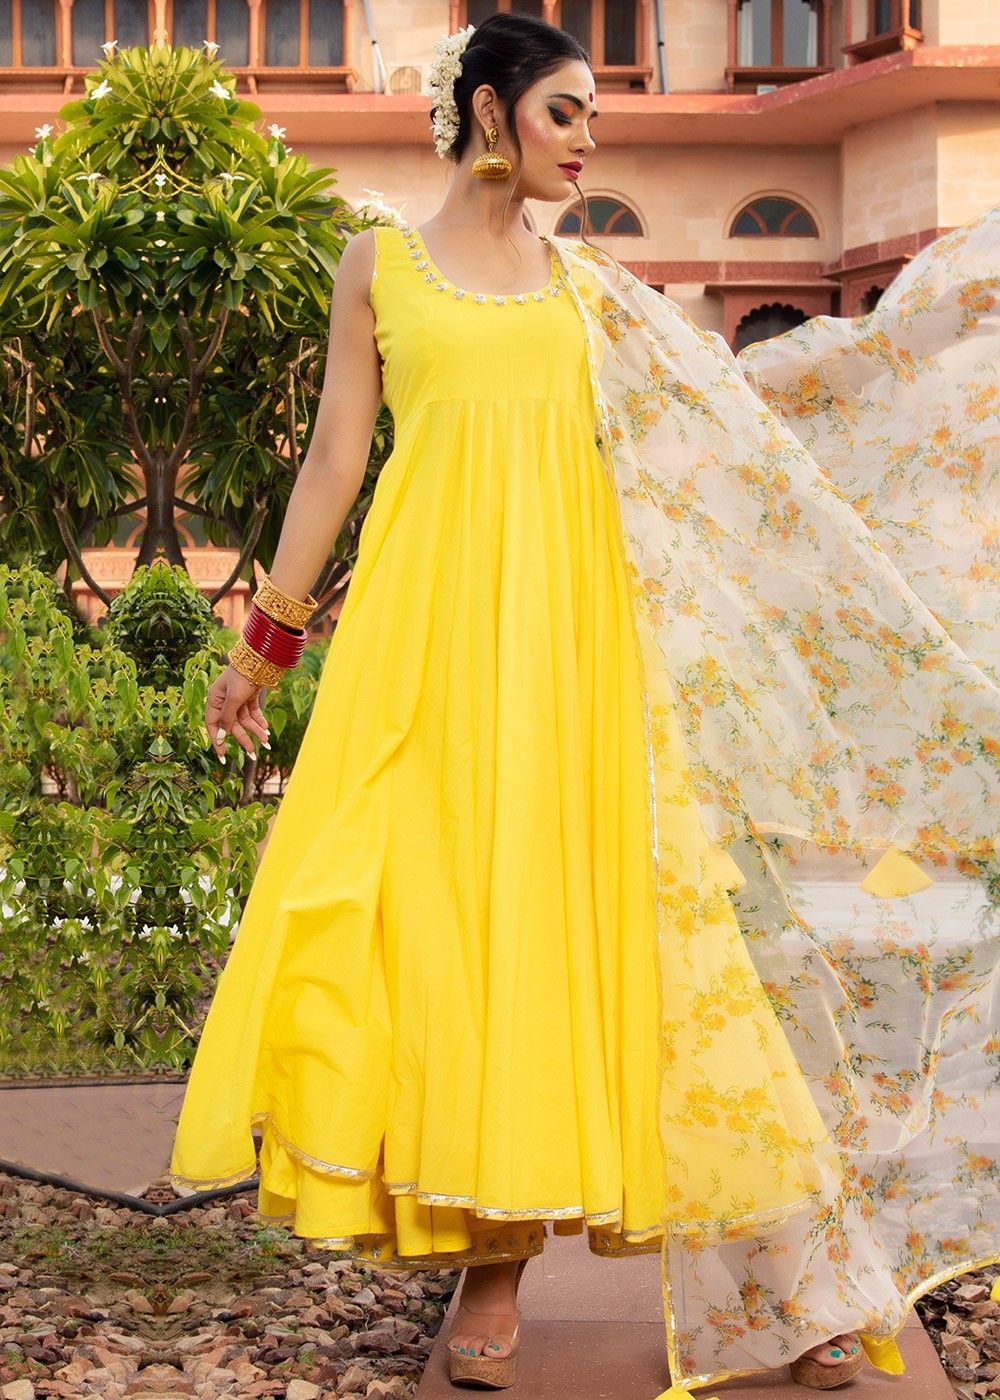 Details more than 160 yellow colour anarkali dress latest